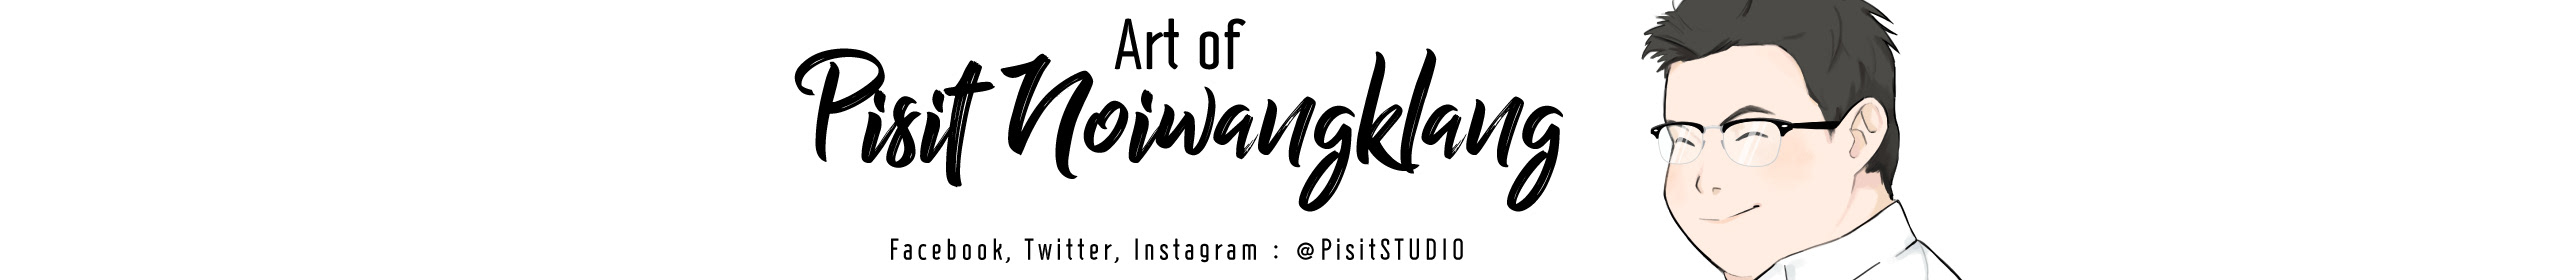 Pisit Noiwangklang's profile banner